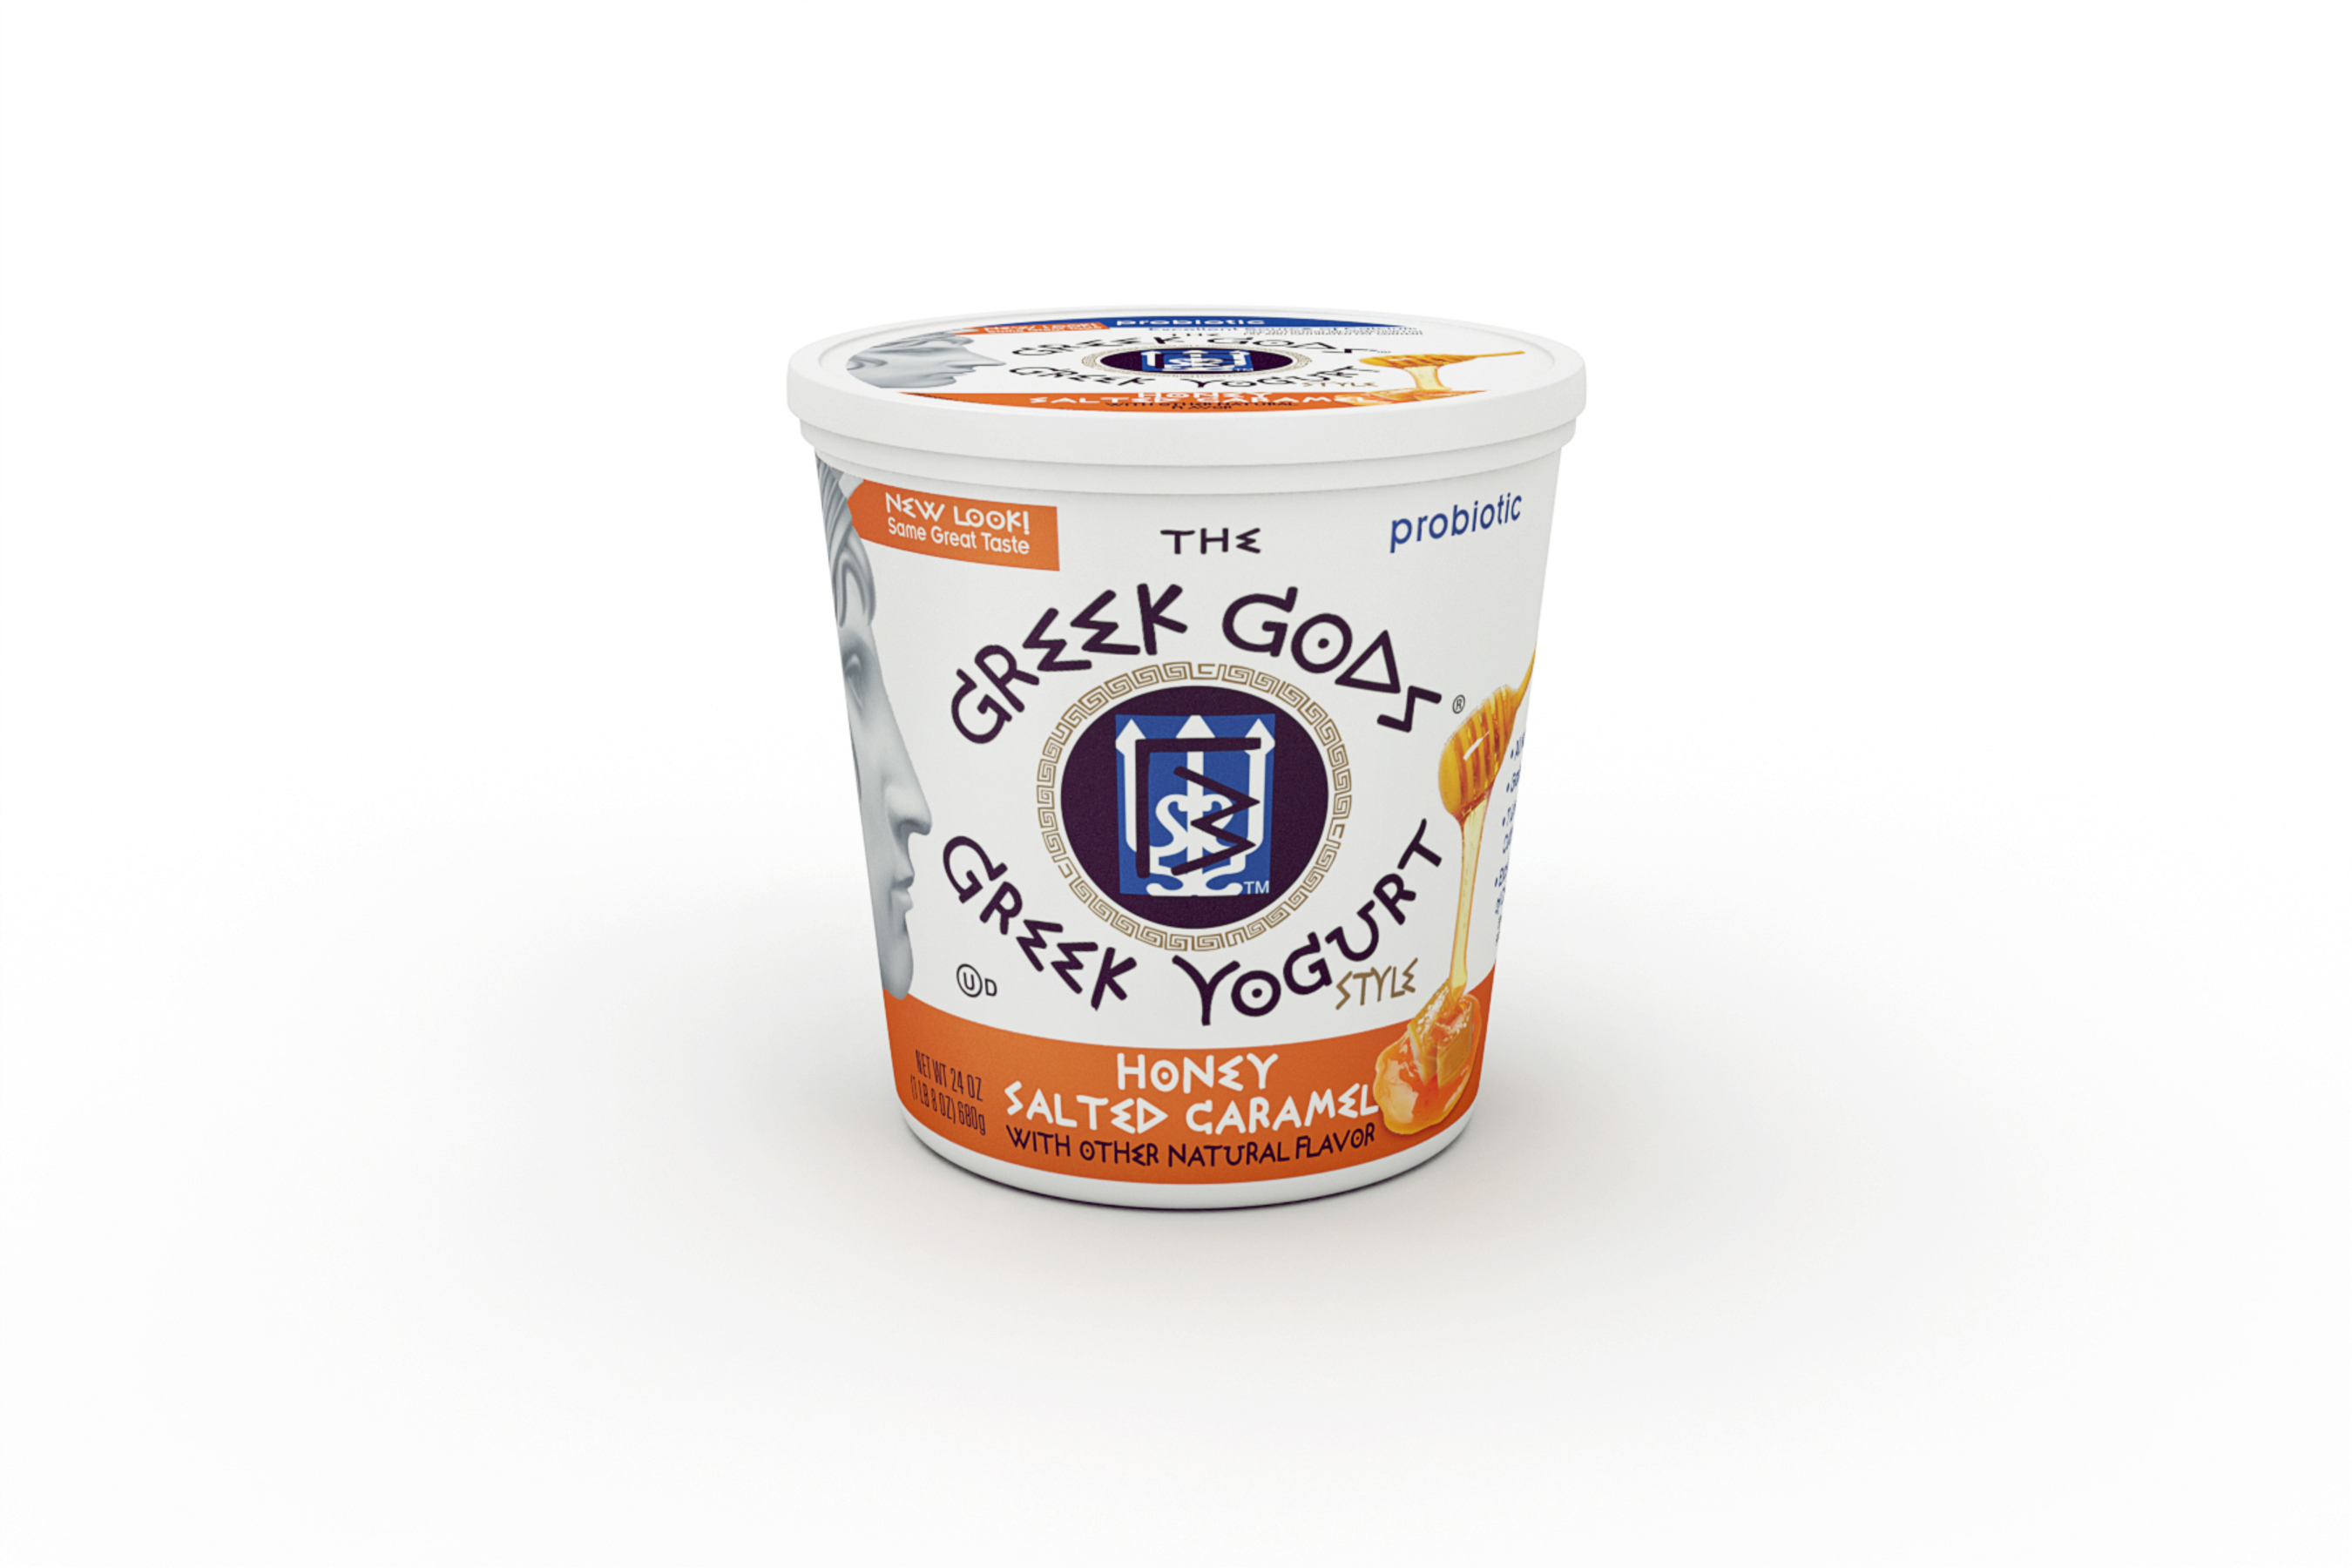 The Greek Gods(R) Honey Salted Caramel Greek-Style Yogurt. (PRNewsFoto/The Hain Celestial Group, Inc.) (PRNewsFoto/THE HAIN CELESTIAL GROUP, INC.)